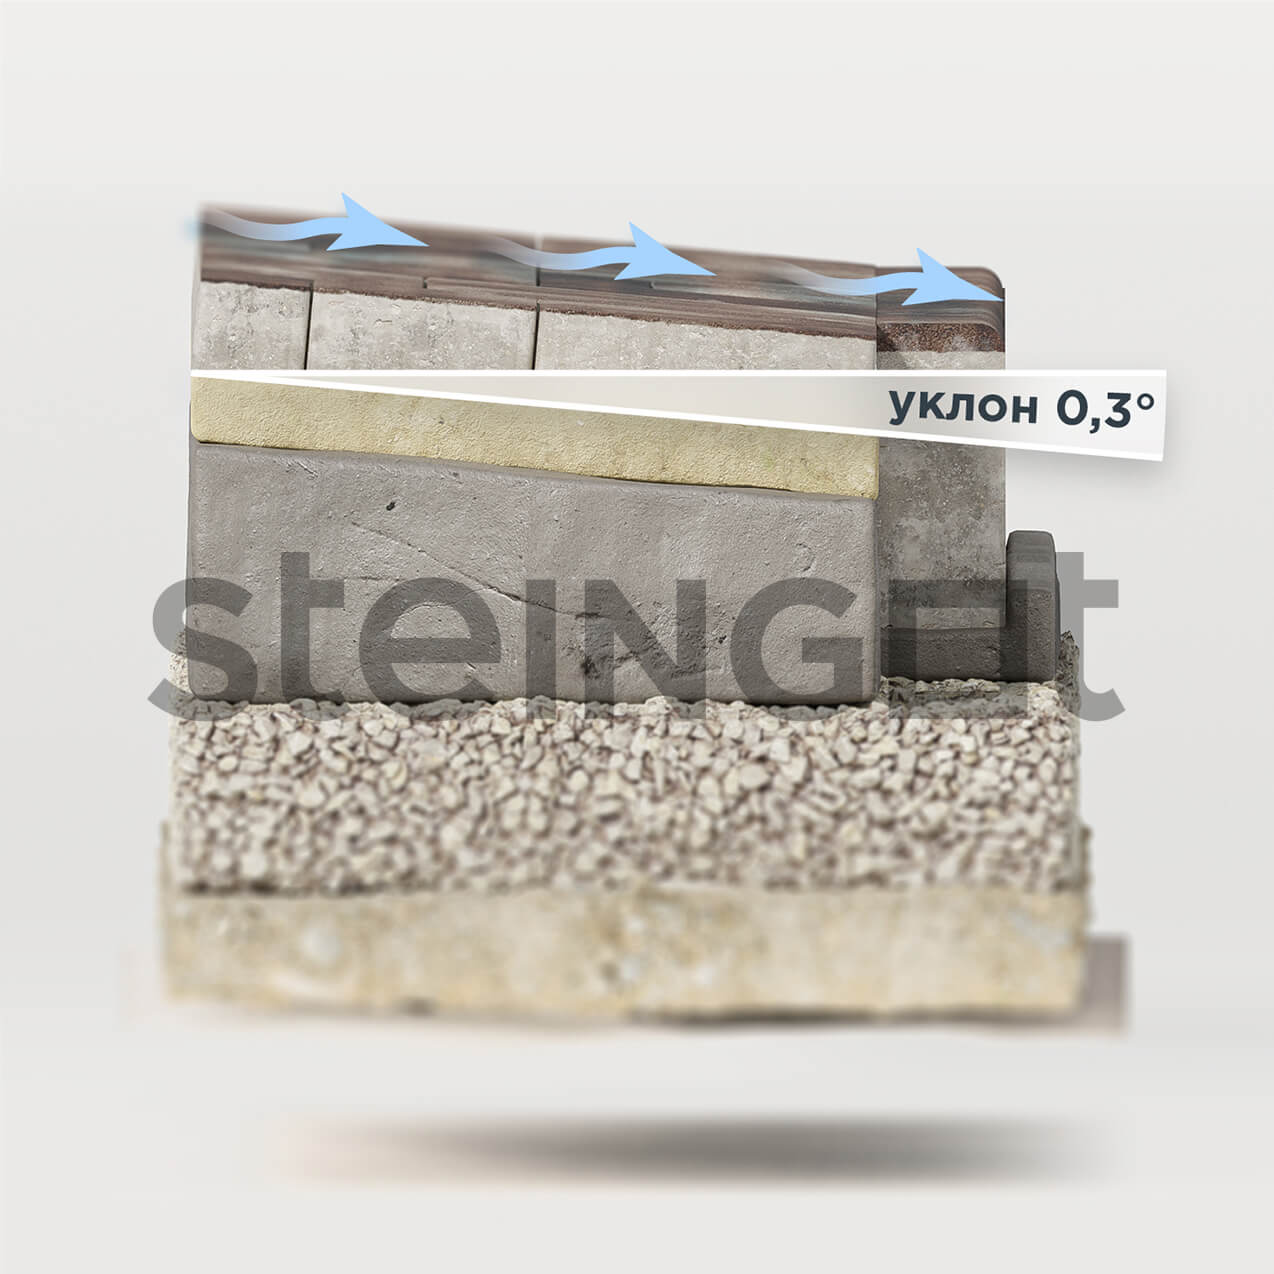 Steingot - укладка на бетонное оcнование без влогоприёмника вид сбоку